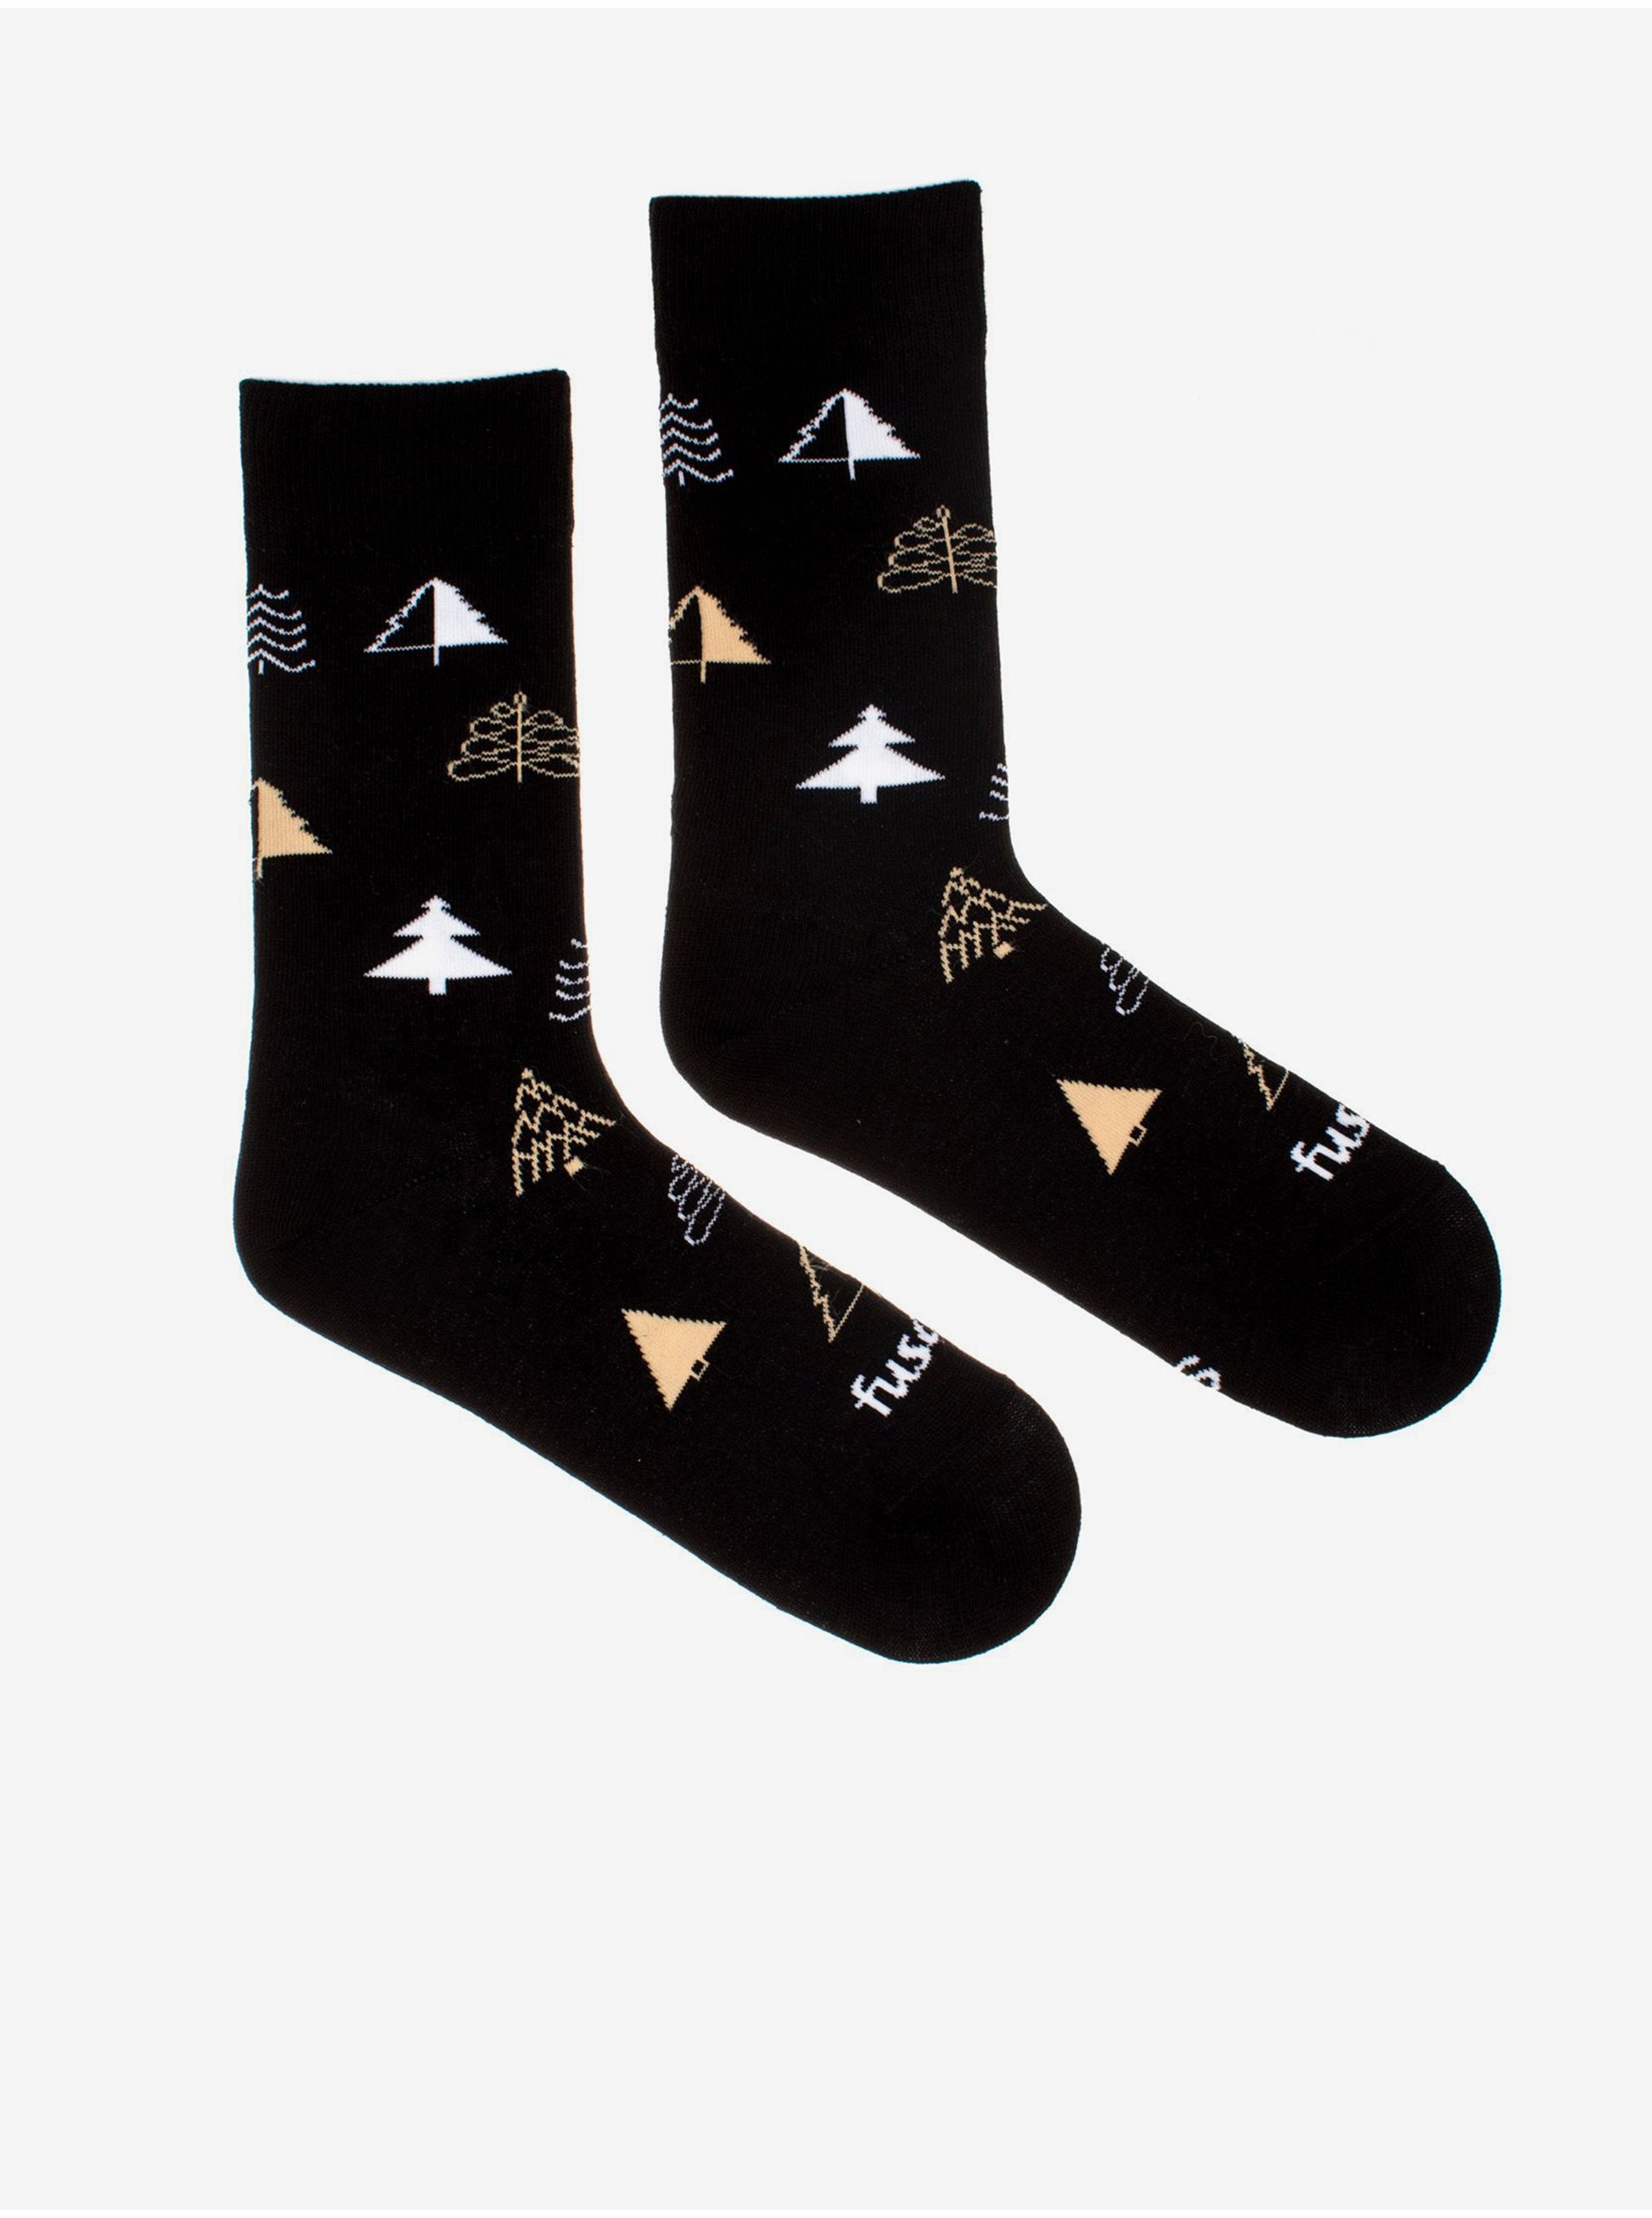 Lacno Černé dámské vzorované ponožky Fusakle Stromce v zime